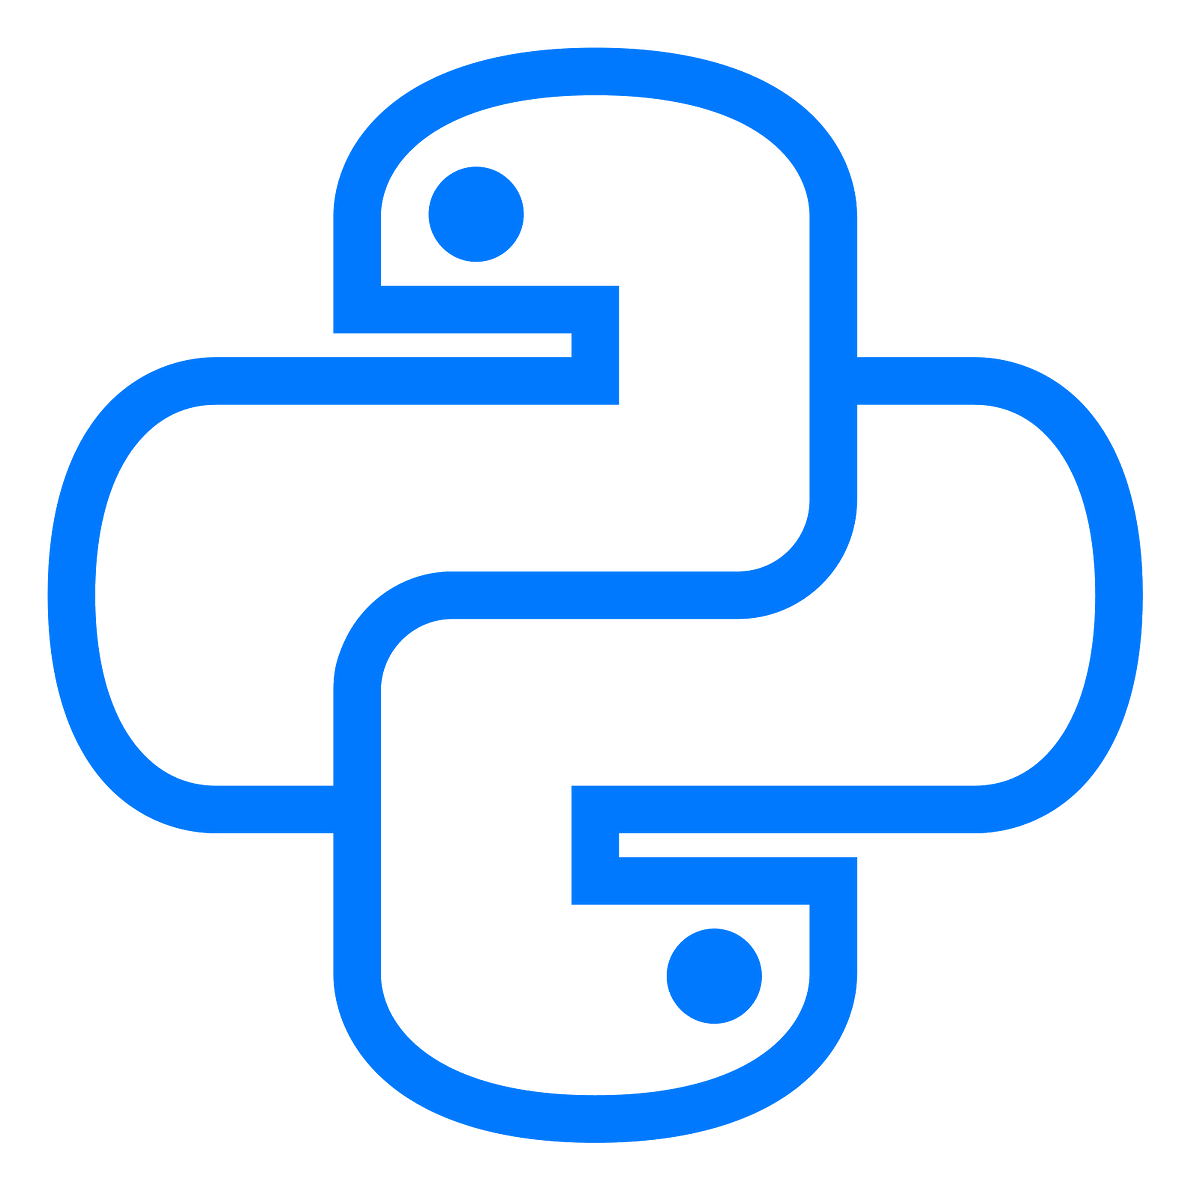 Логотип языка python. Python язык программирования лого. Пайтон язык программирования логотип. Питон язык программирования лого. Иконки языков программирования питон.